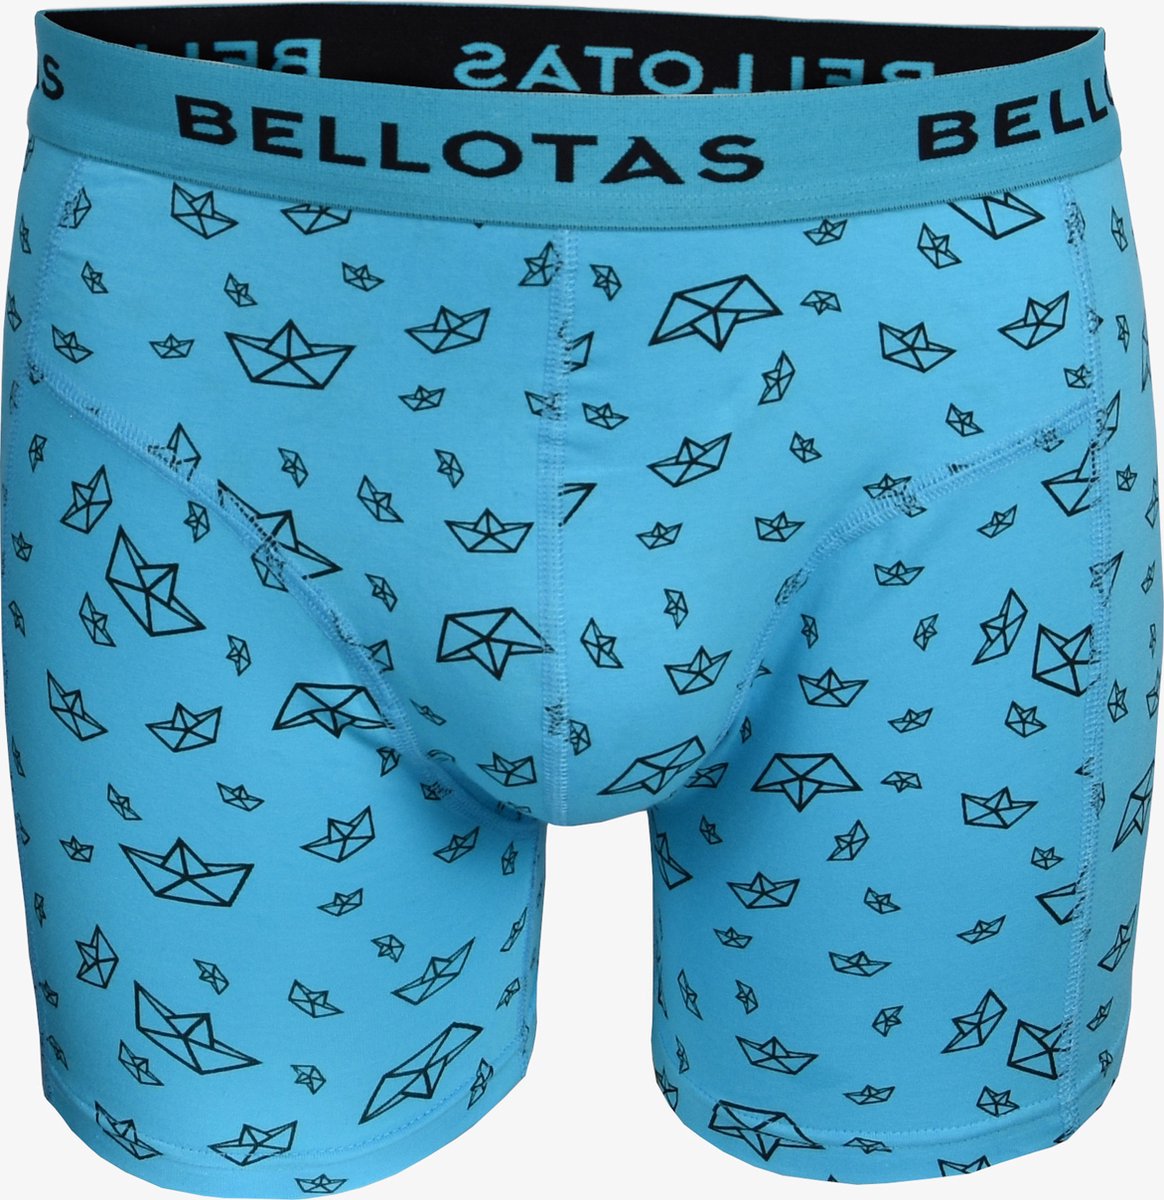 Bellotas - Boxershort - Aster L